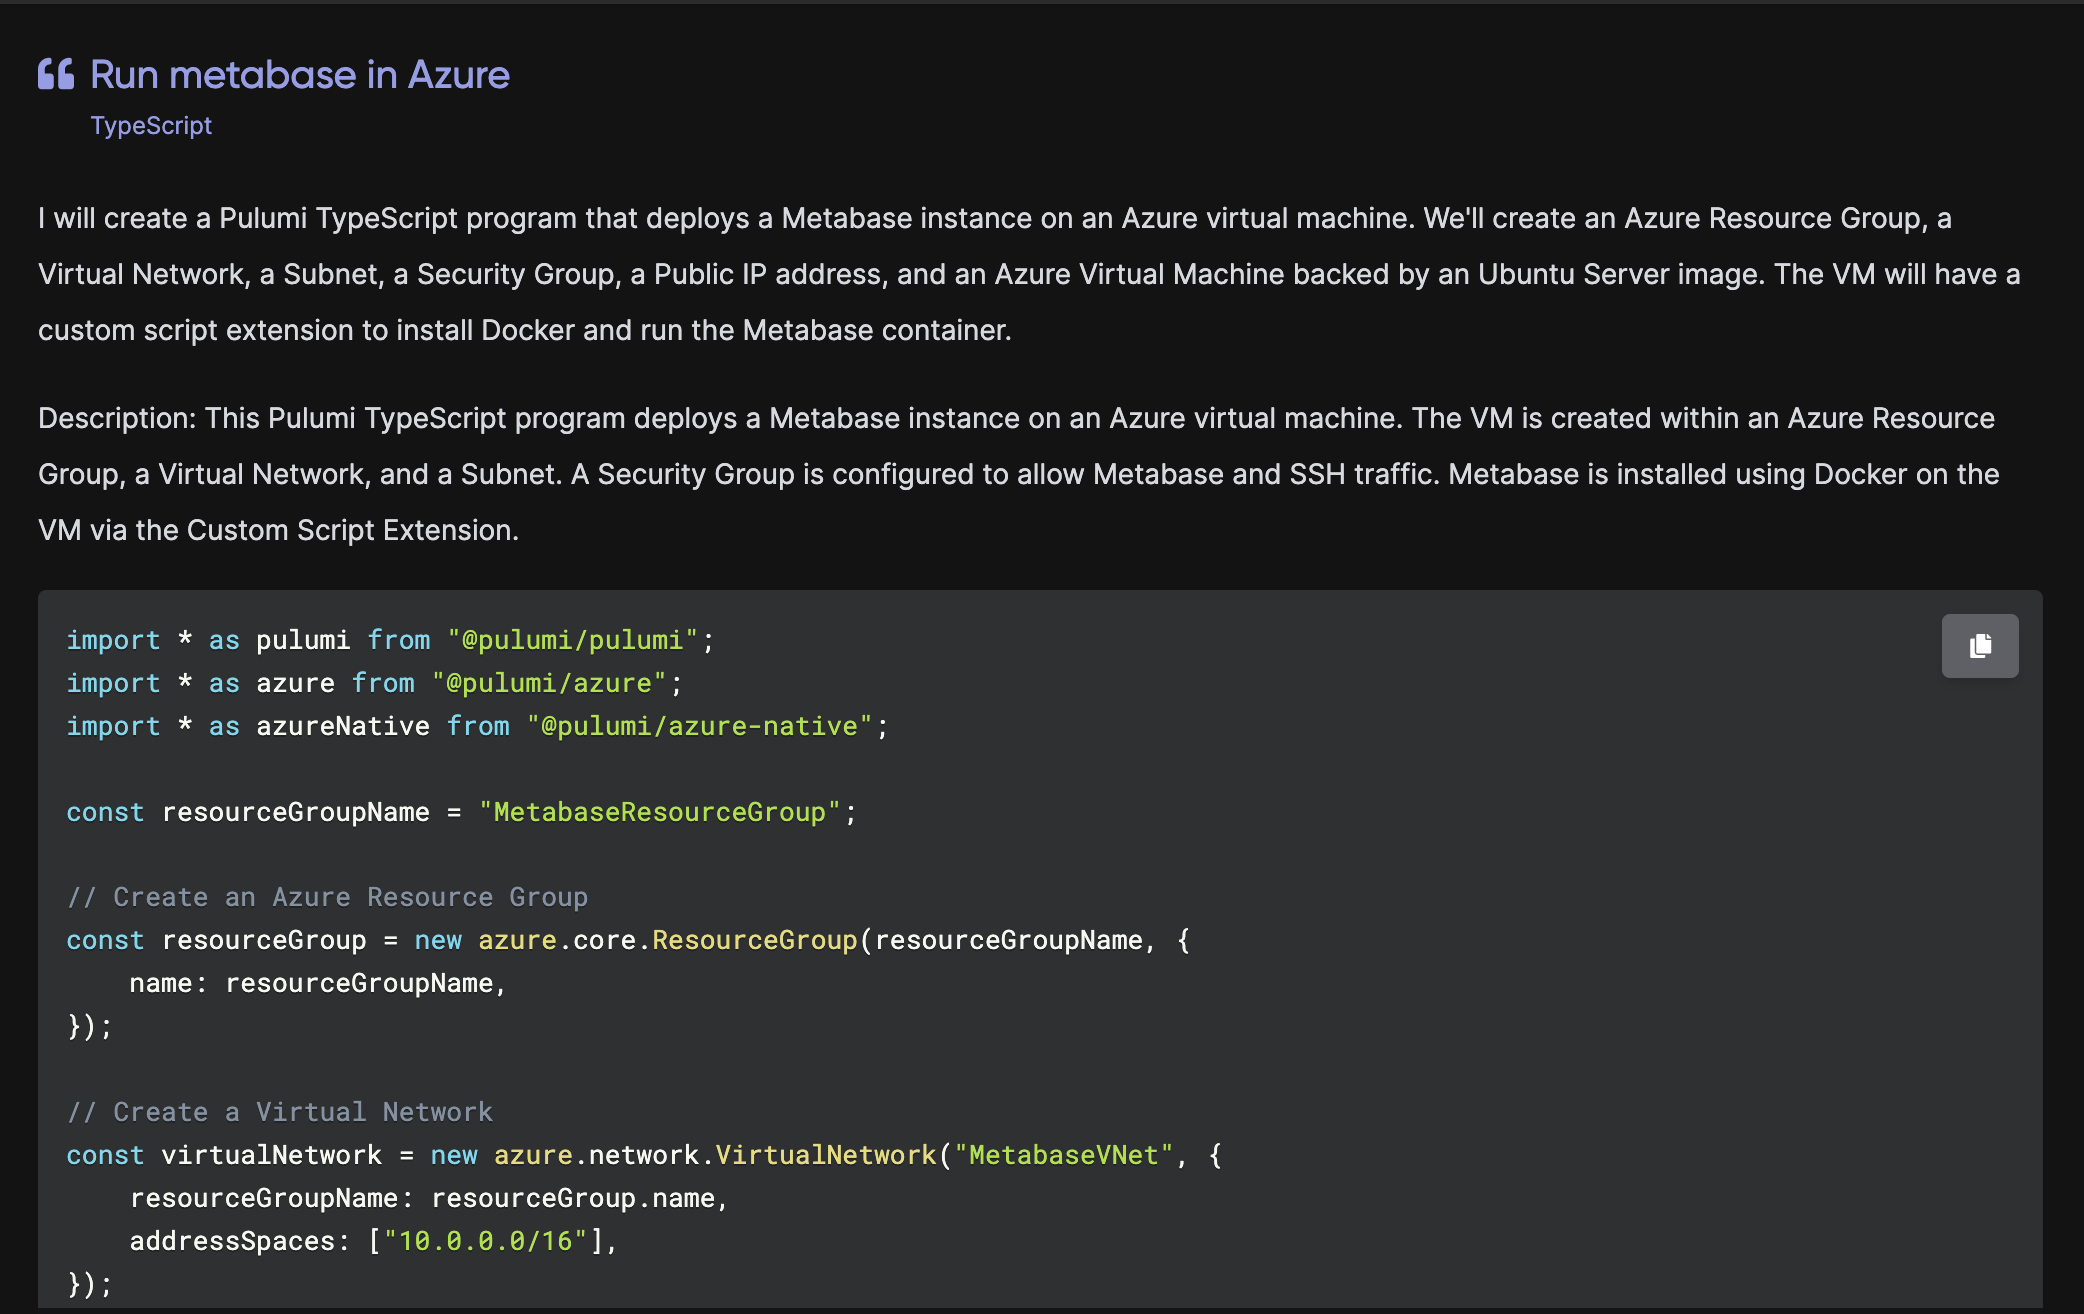 Pulumi AI response to Run metabase in Azure, using TypeScript